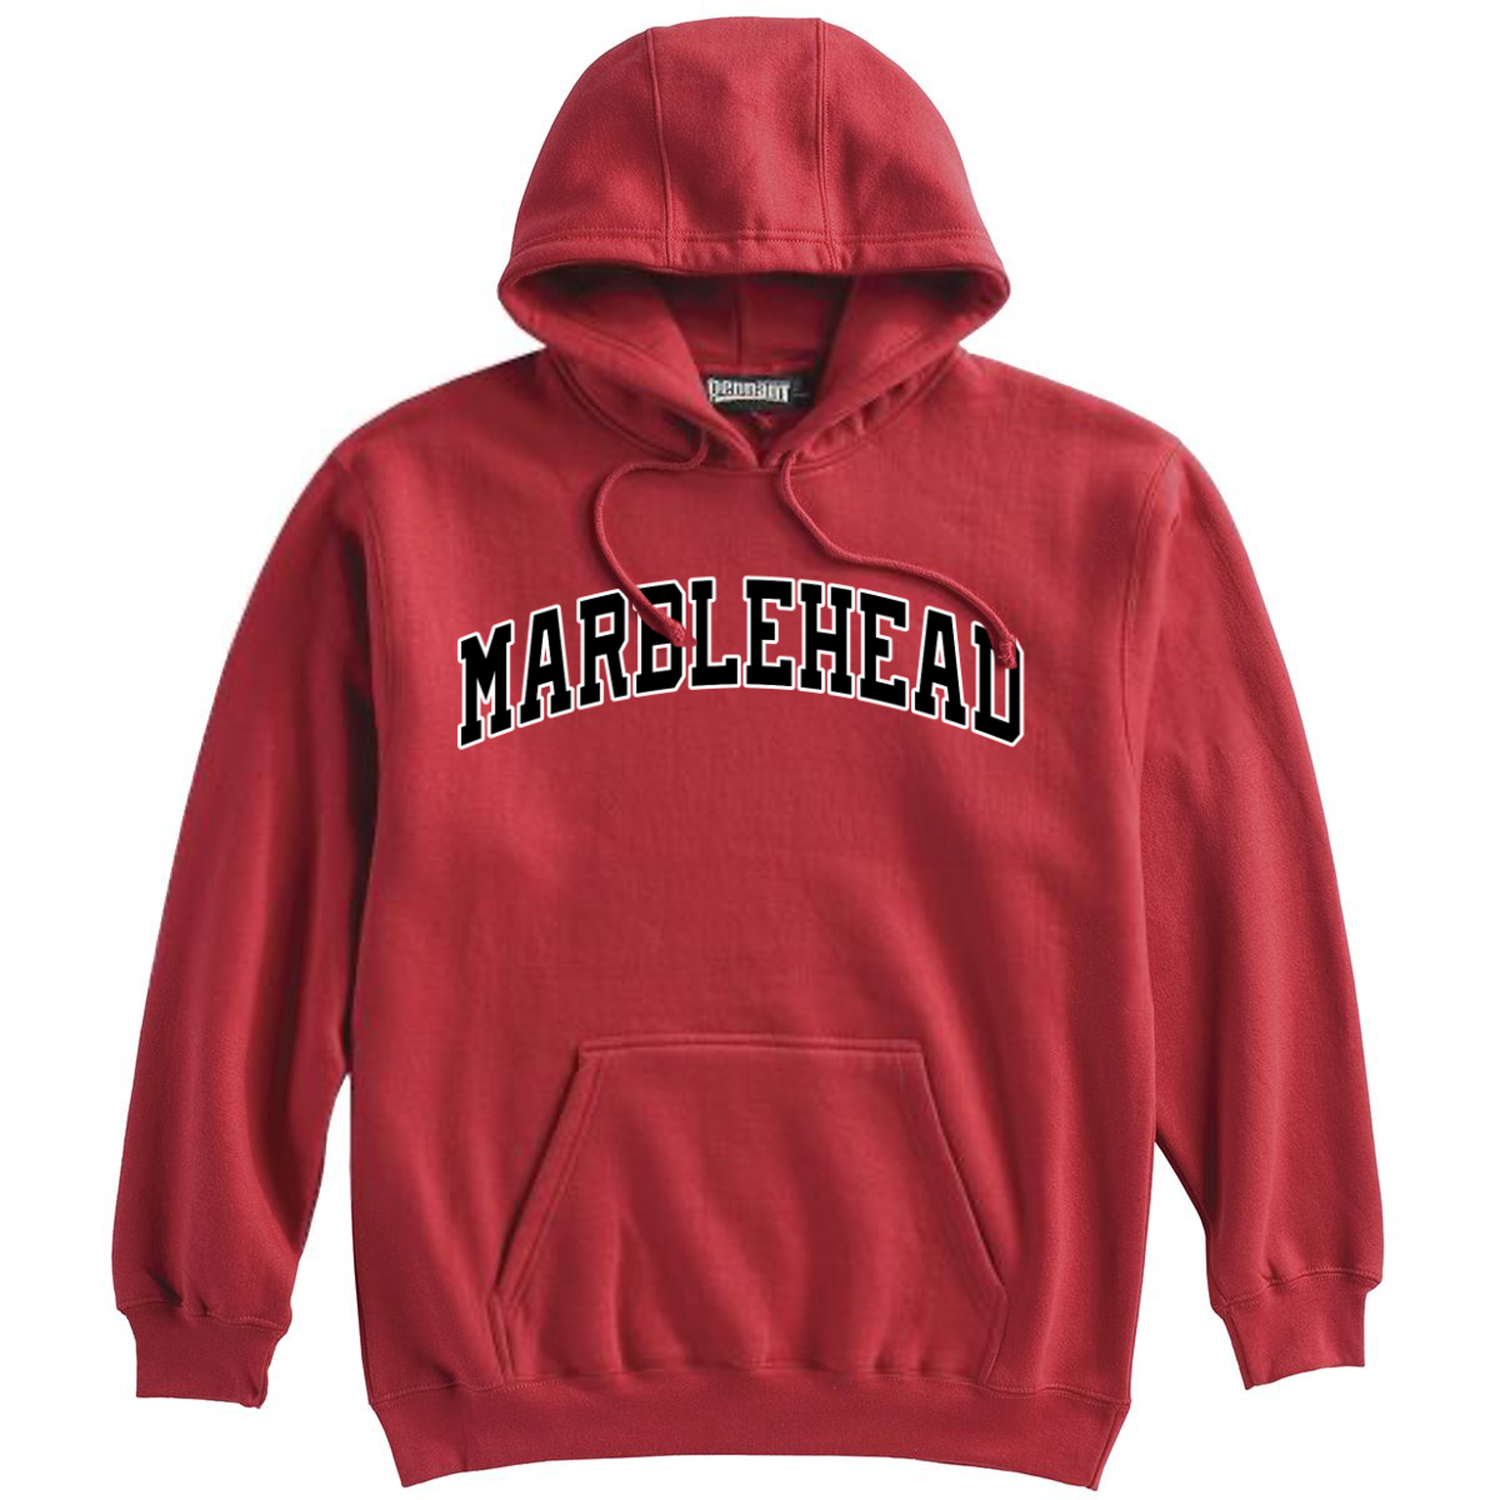 Marblehead Coastal Premium Hoodie